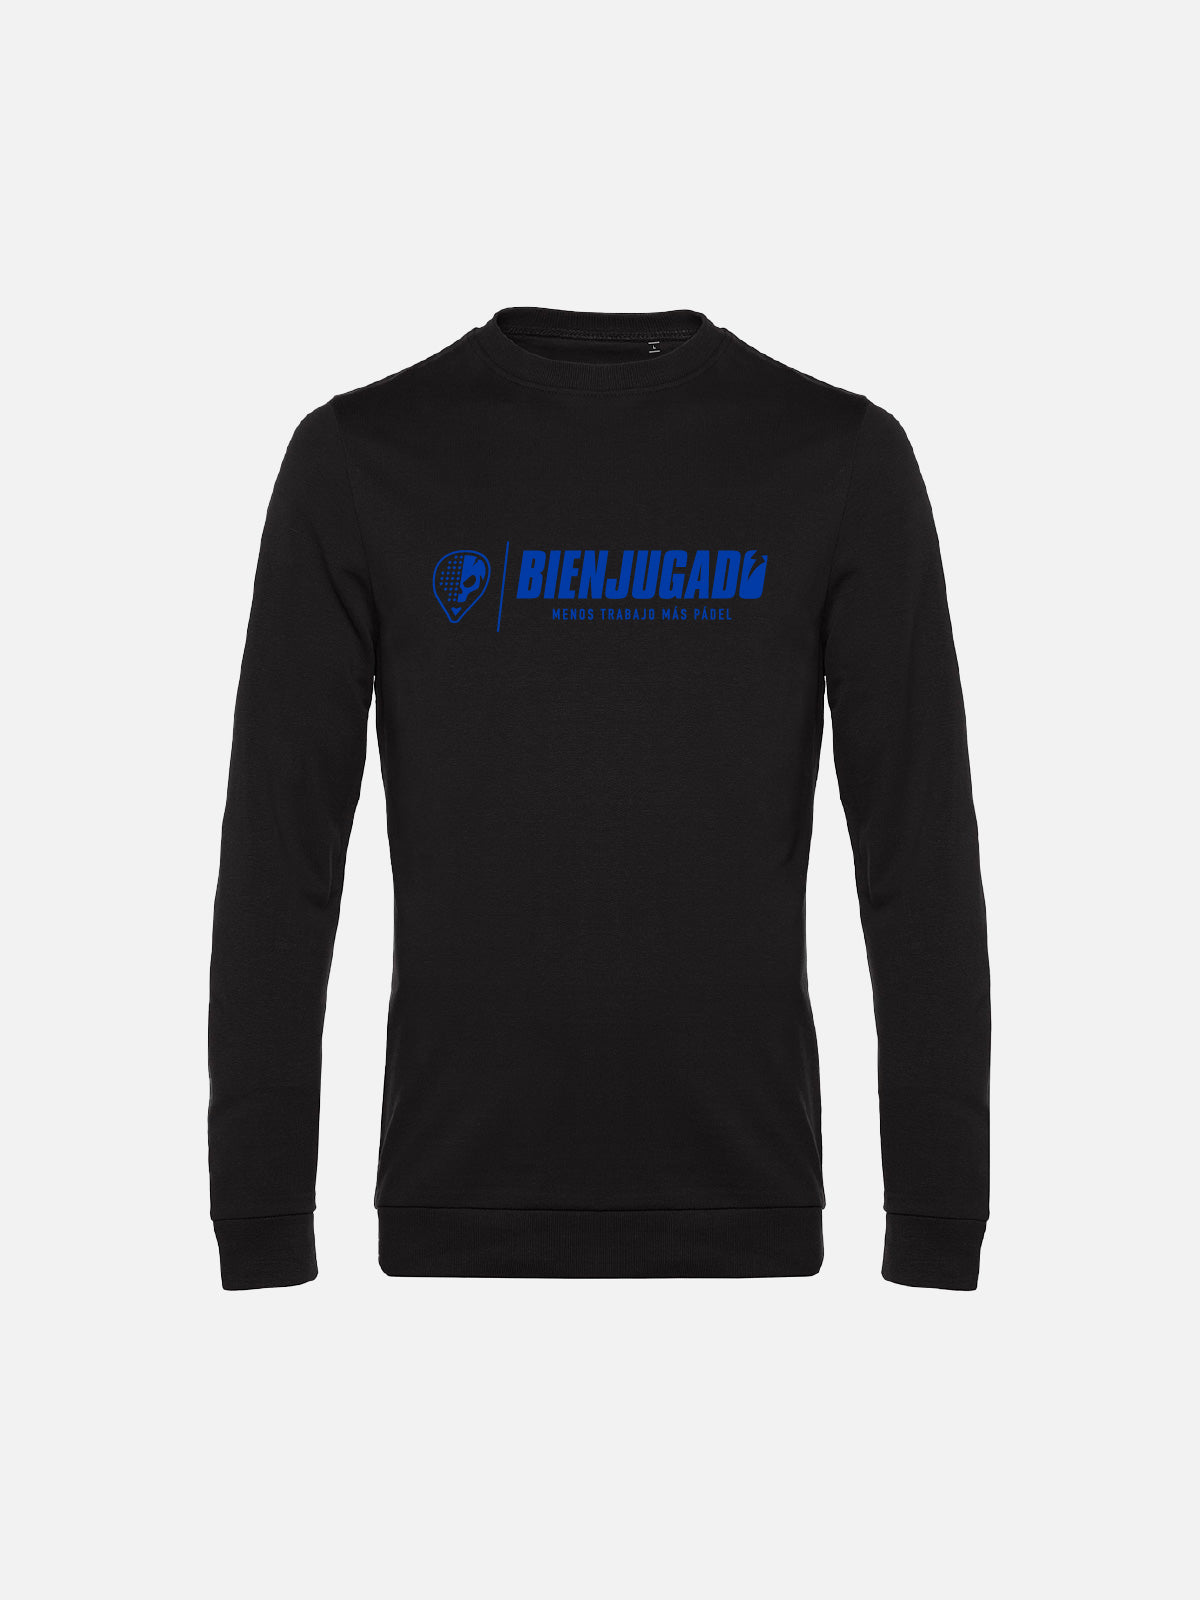 Men's Mid Season Round Neck Sweatshirt - Black